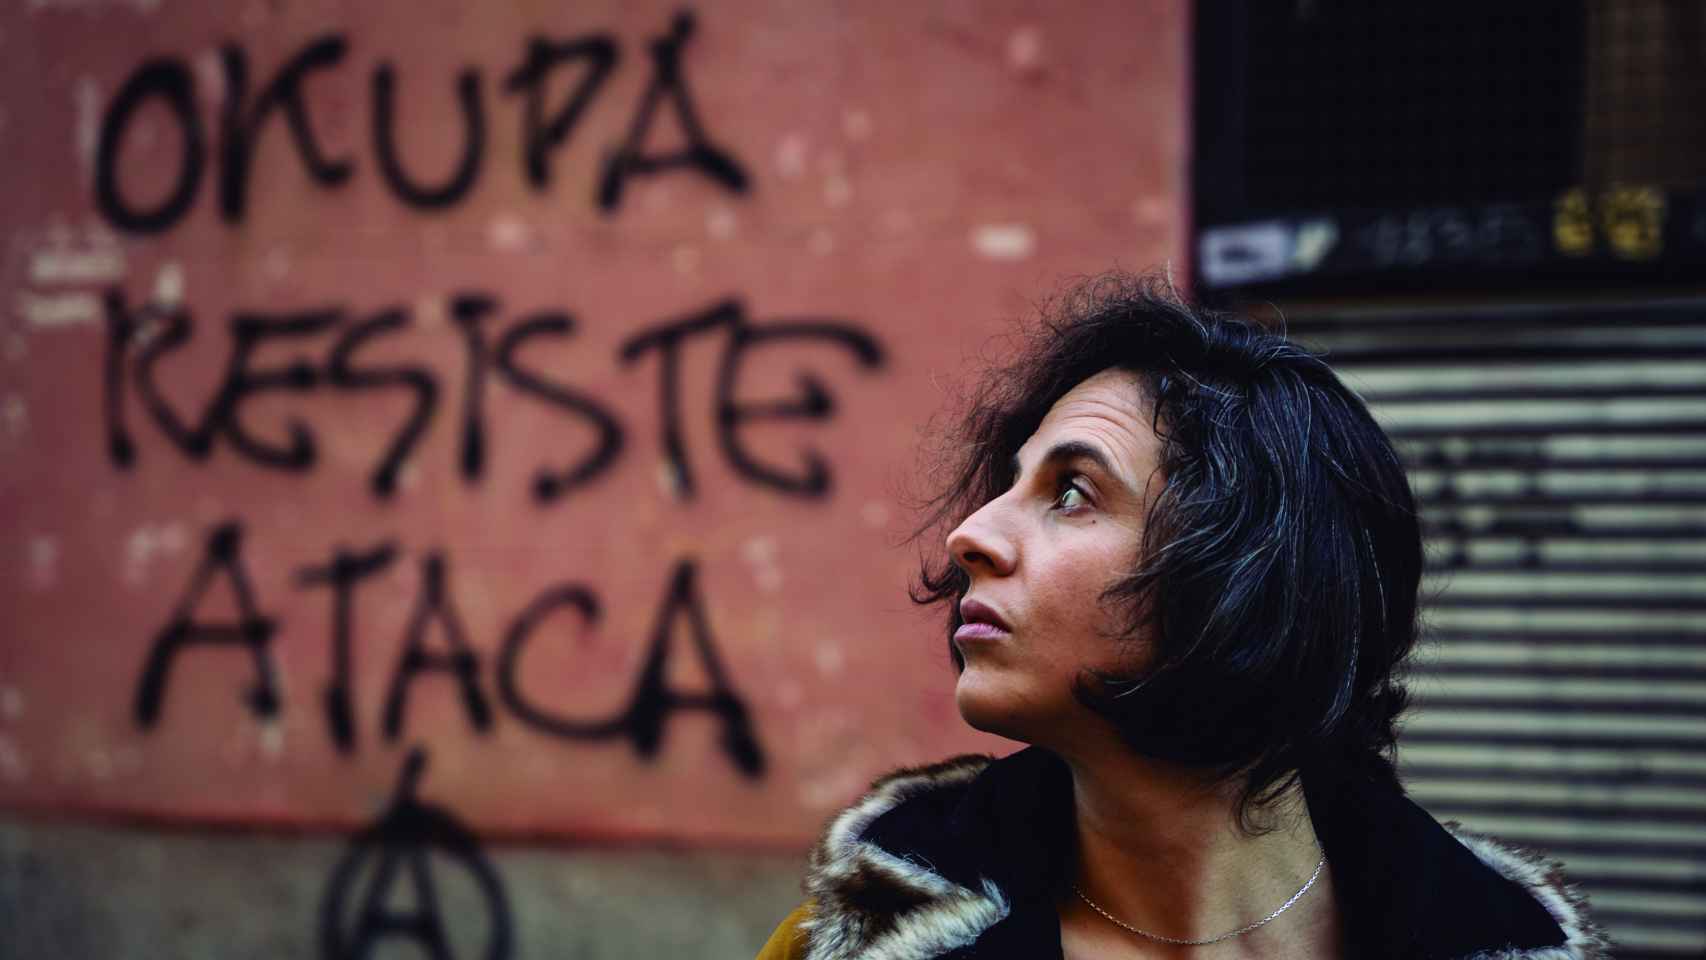 La escritora Cristina Morales. Foto: Esteban Palazuelos